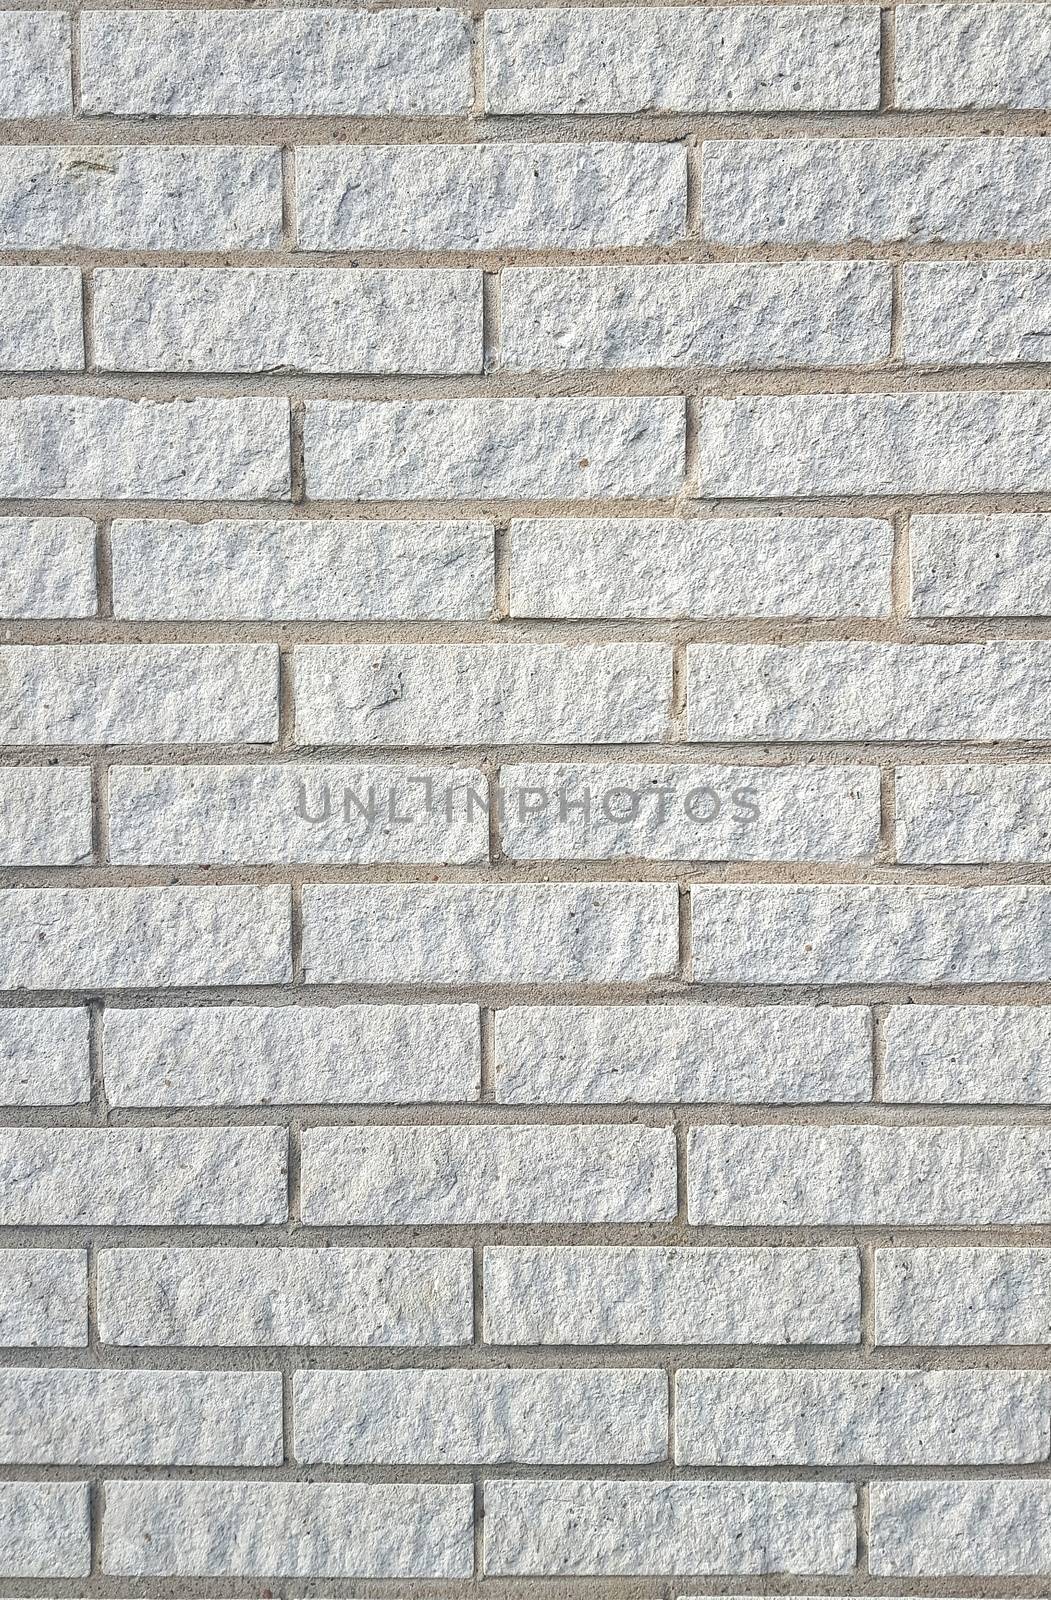 White brick background by thisboy